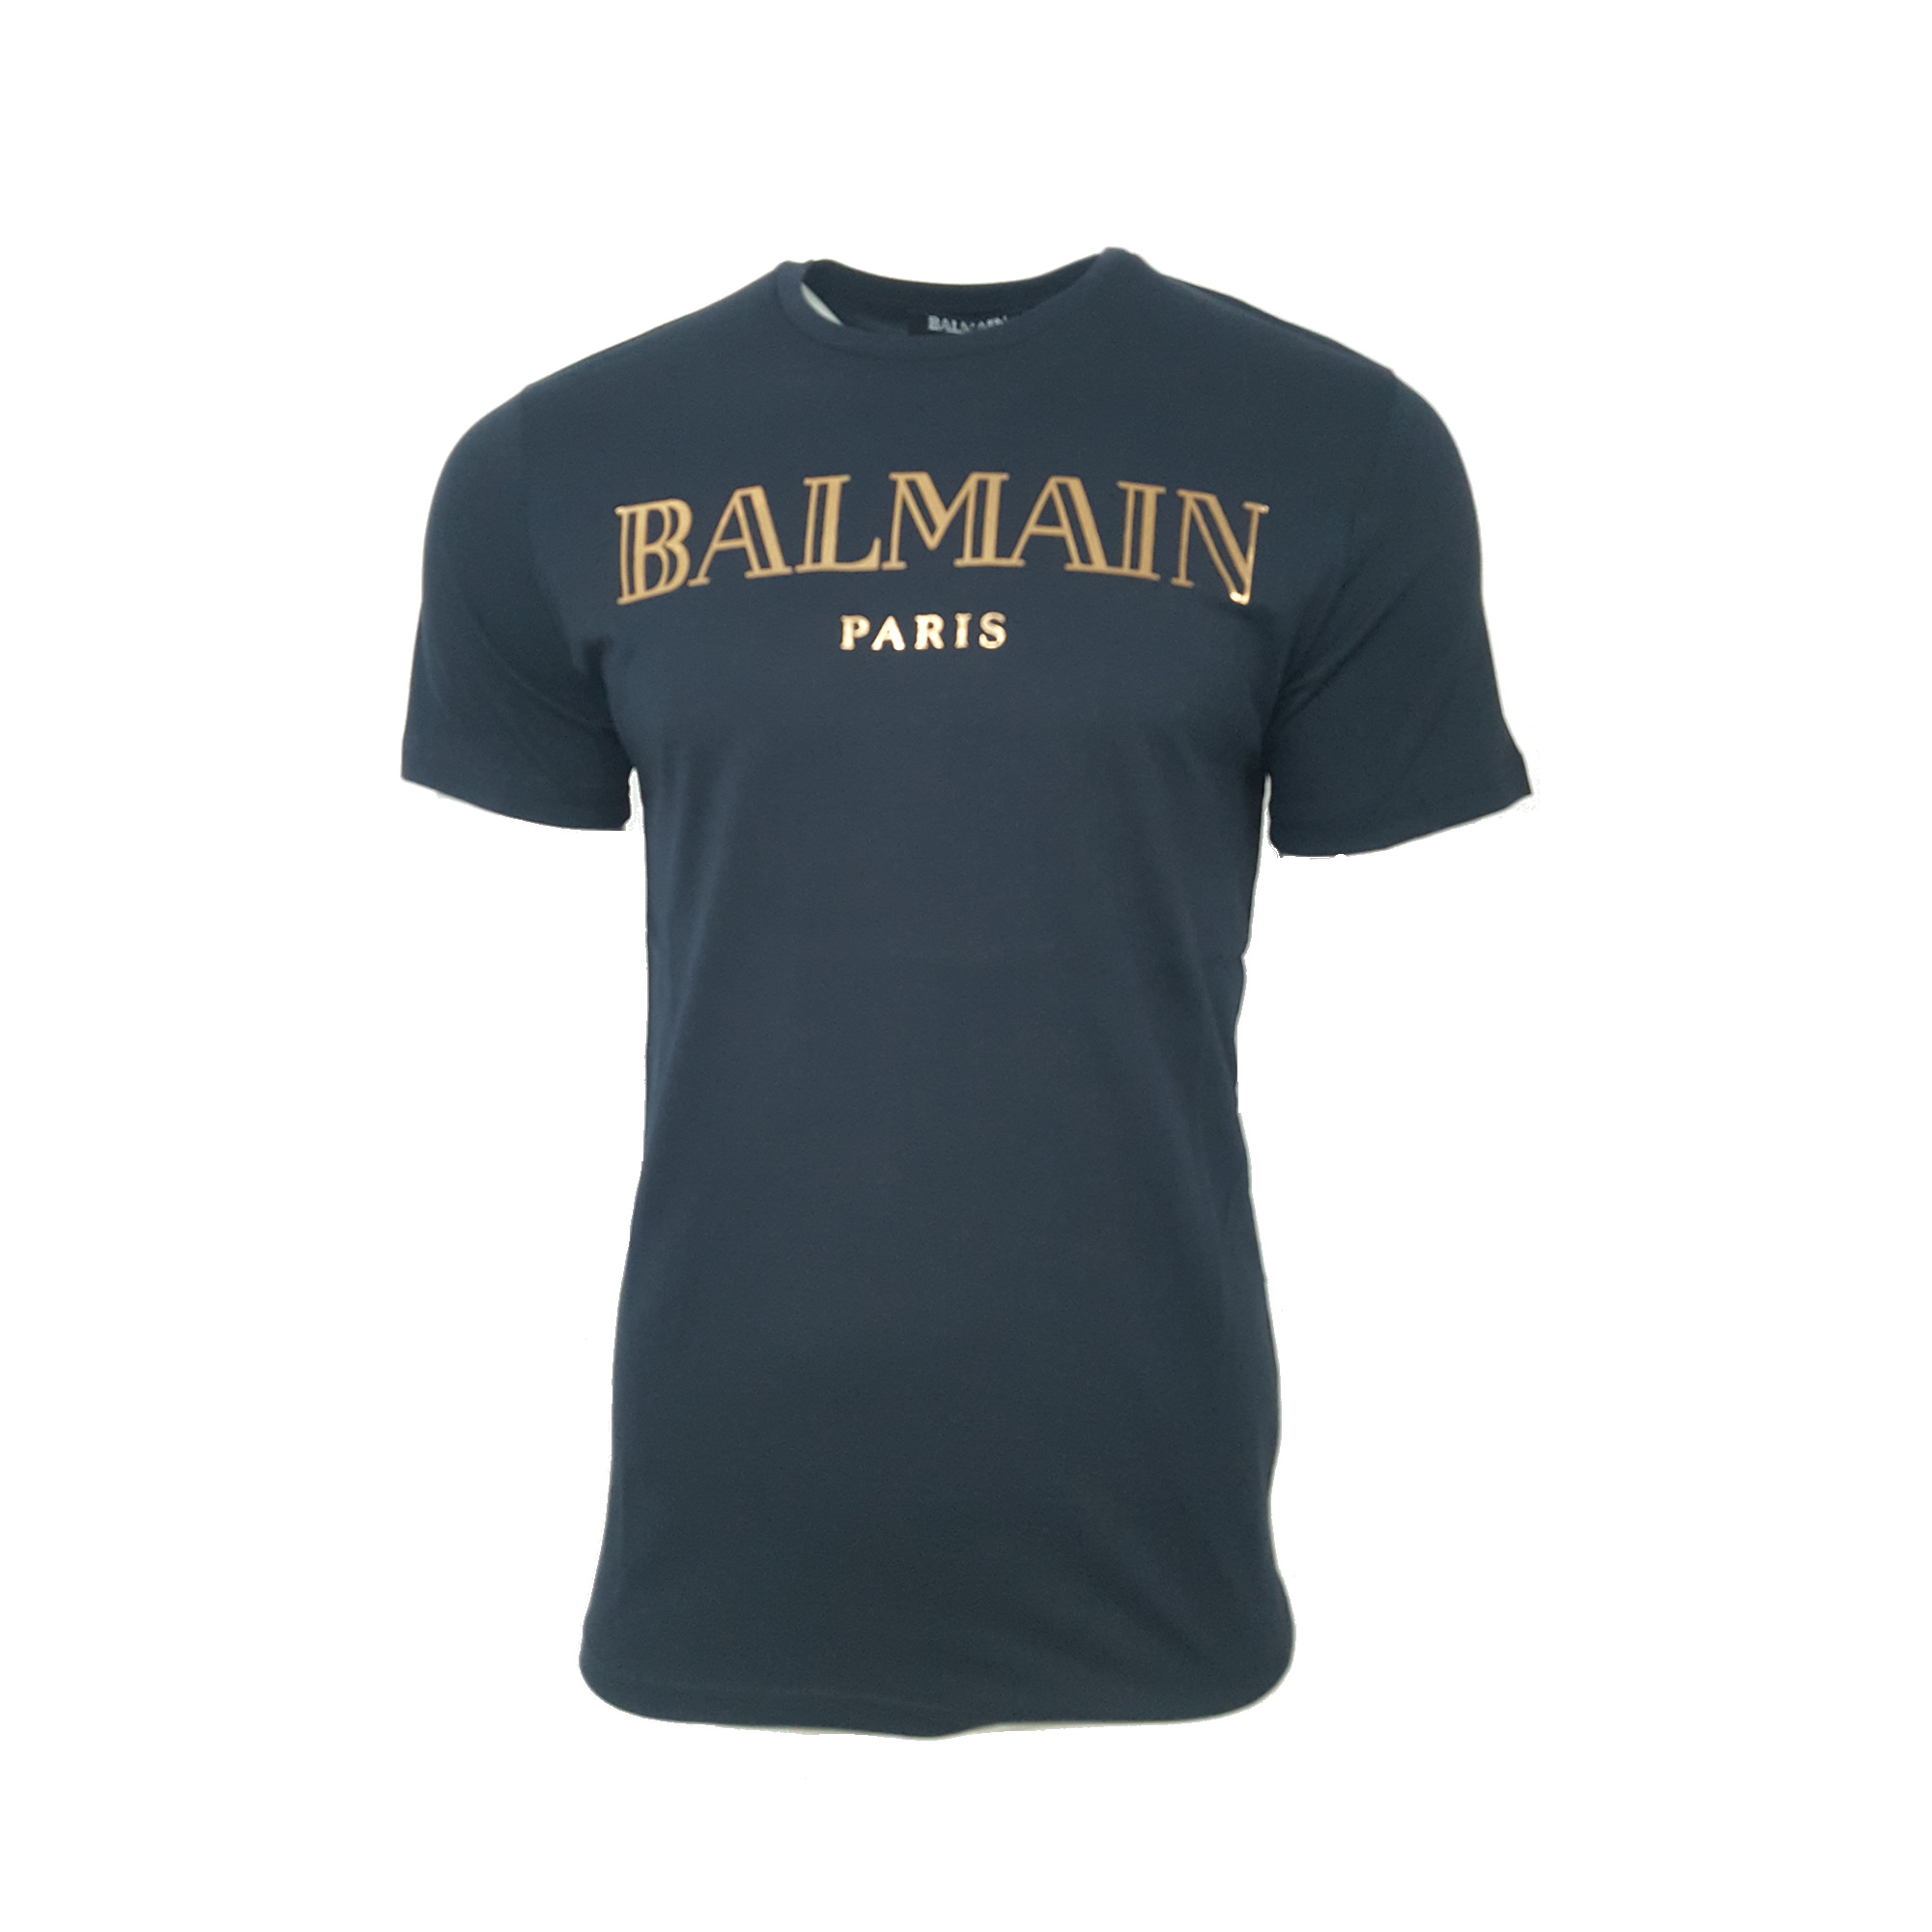 Balmain Crew T Shirt in Navy - INTOTO7 Menswear